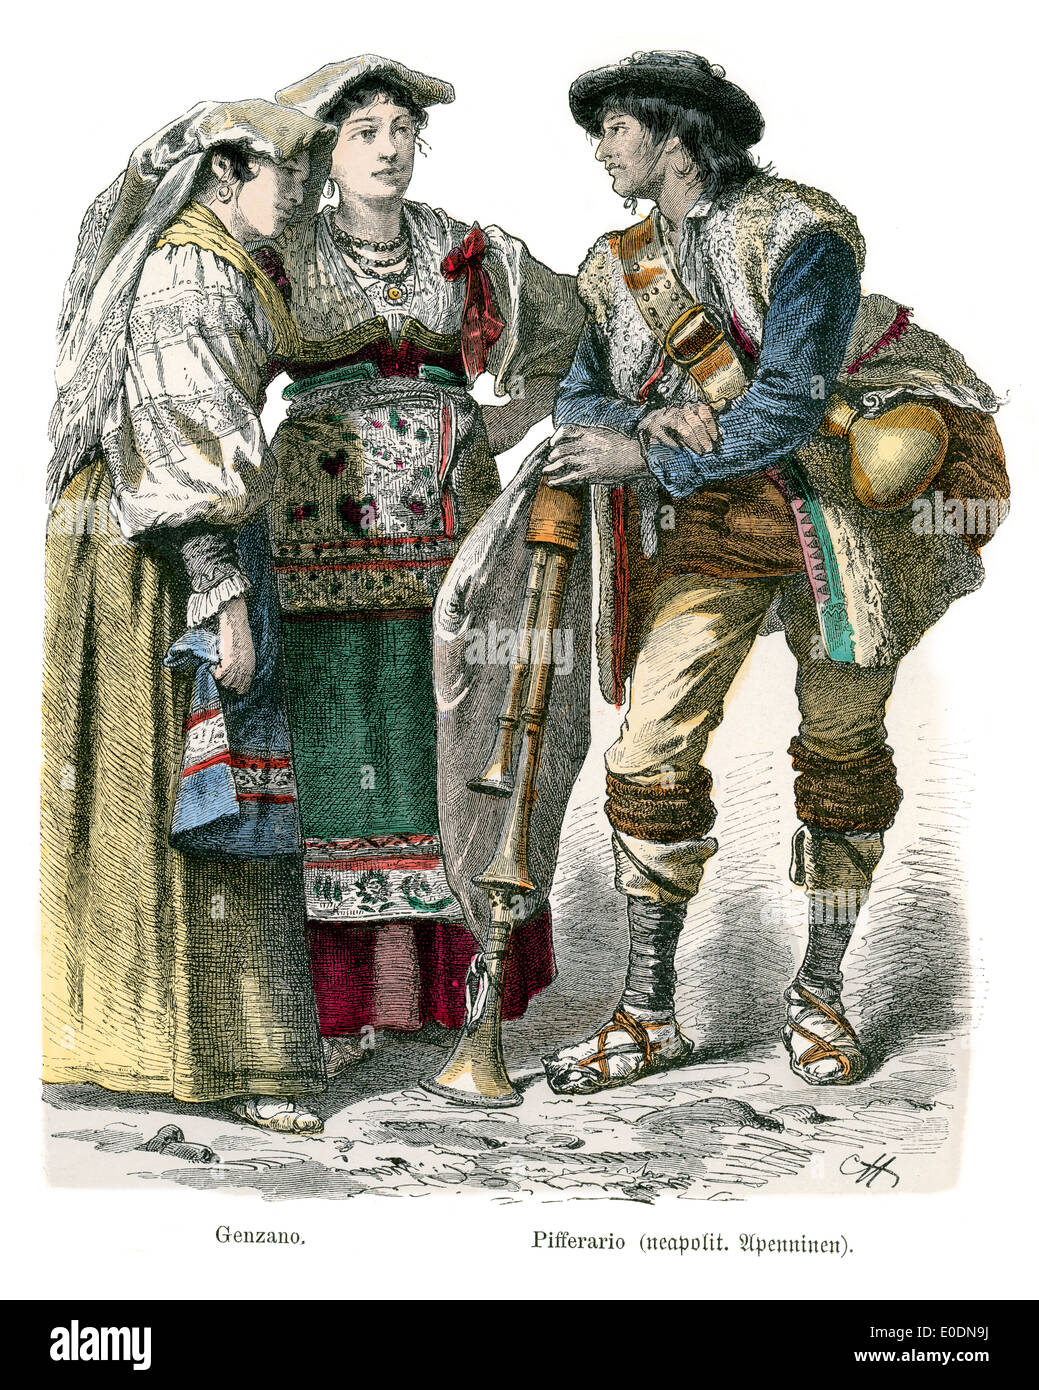 Traditional costumes of Italy, 19th Century. Genzano and Pifferario (Neapolitan Apennines) Stock Photo